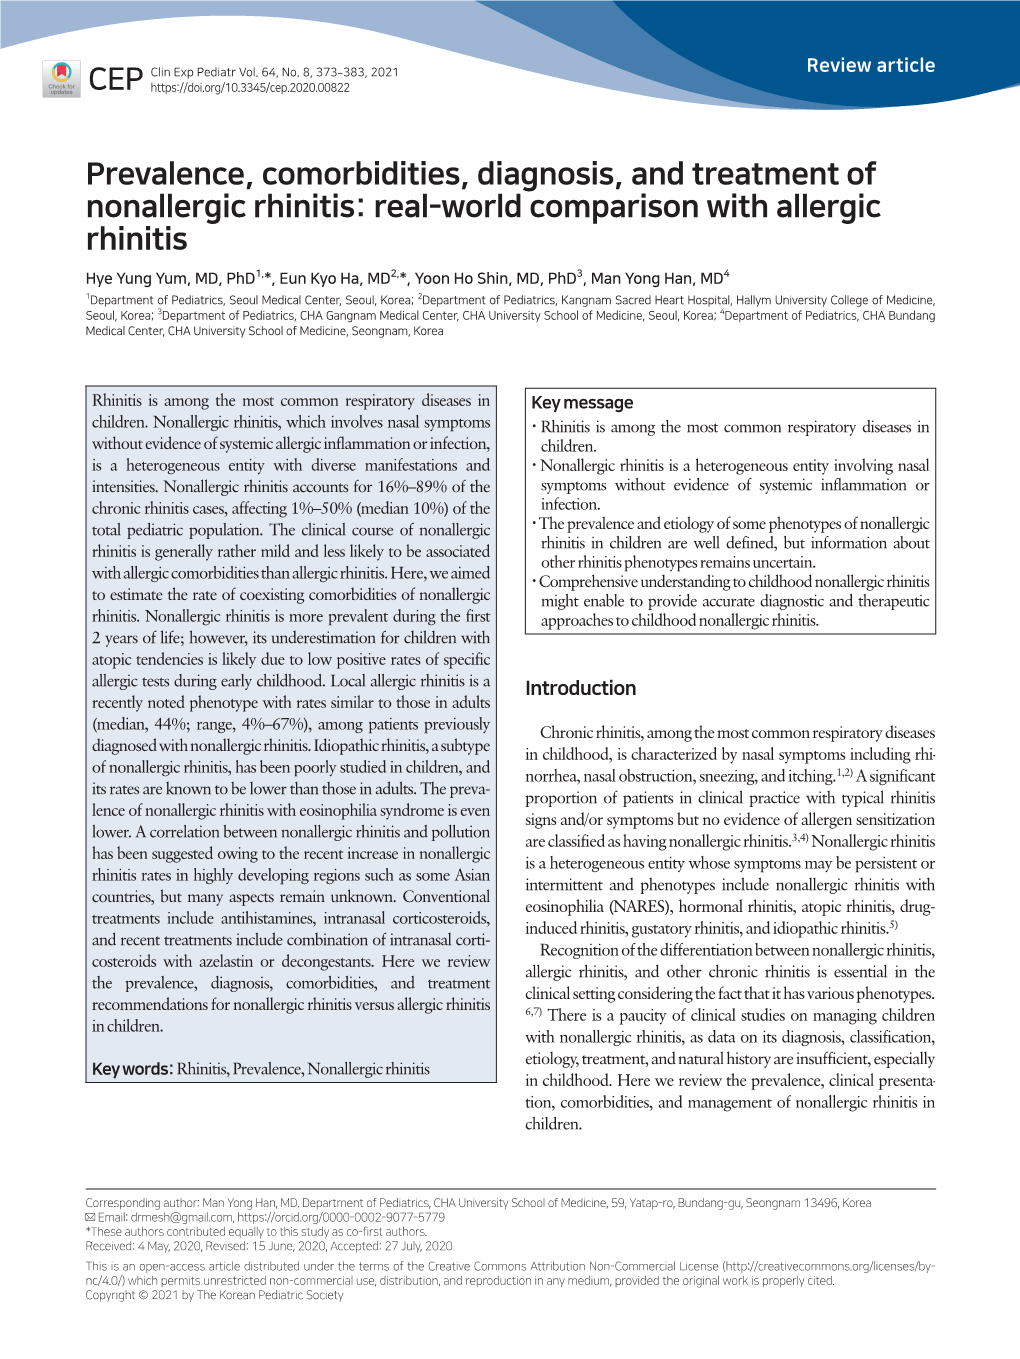 Prevalence, Comorbidities, Diagnosis, and Treatment of Nonallergic Rhinitis